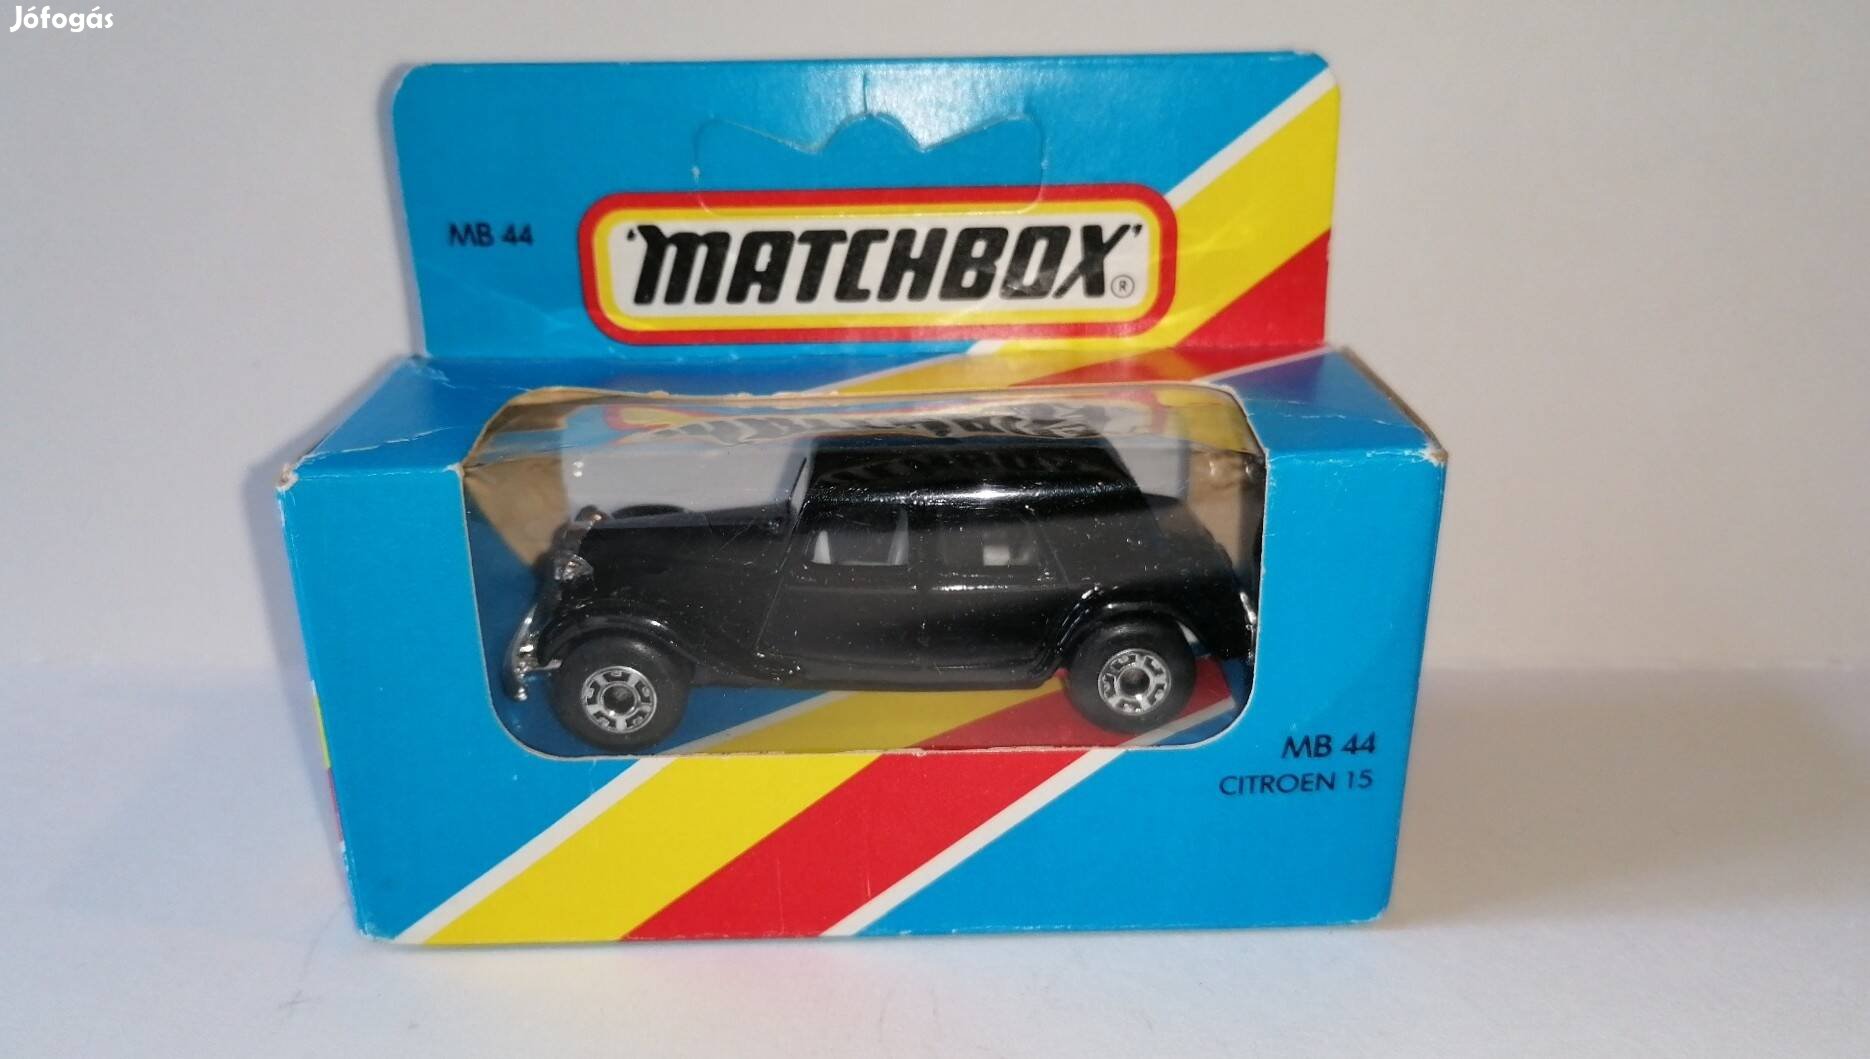 Matchbox - MB 44 Citroën 15 (1983 Made in England) 